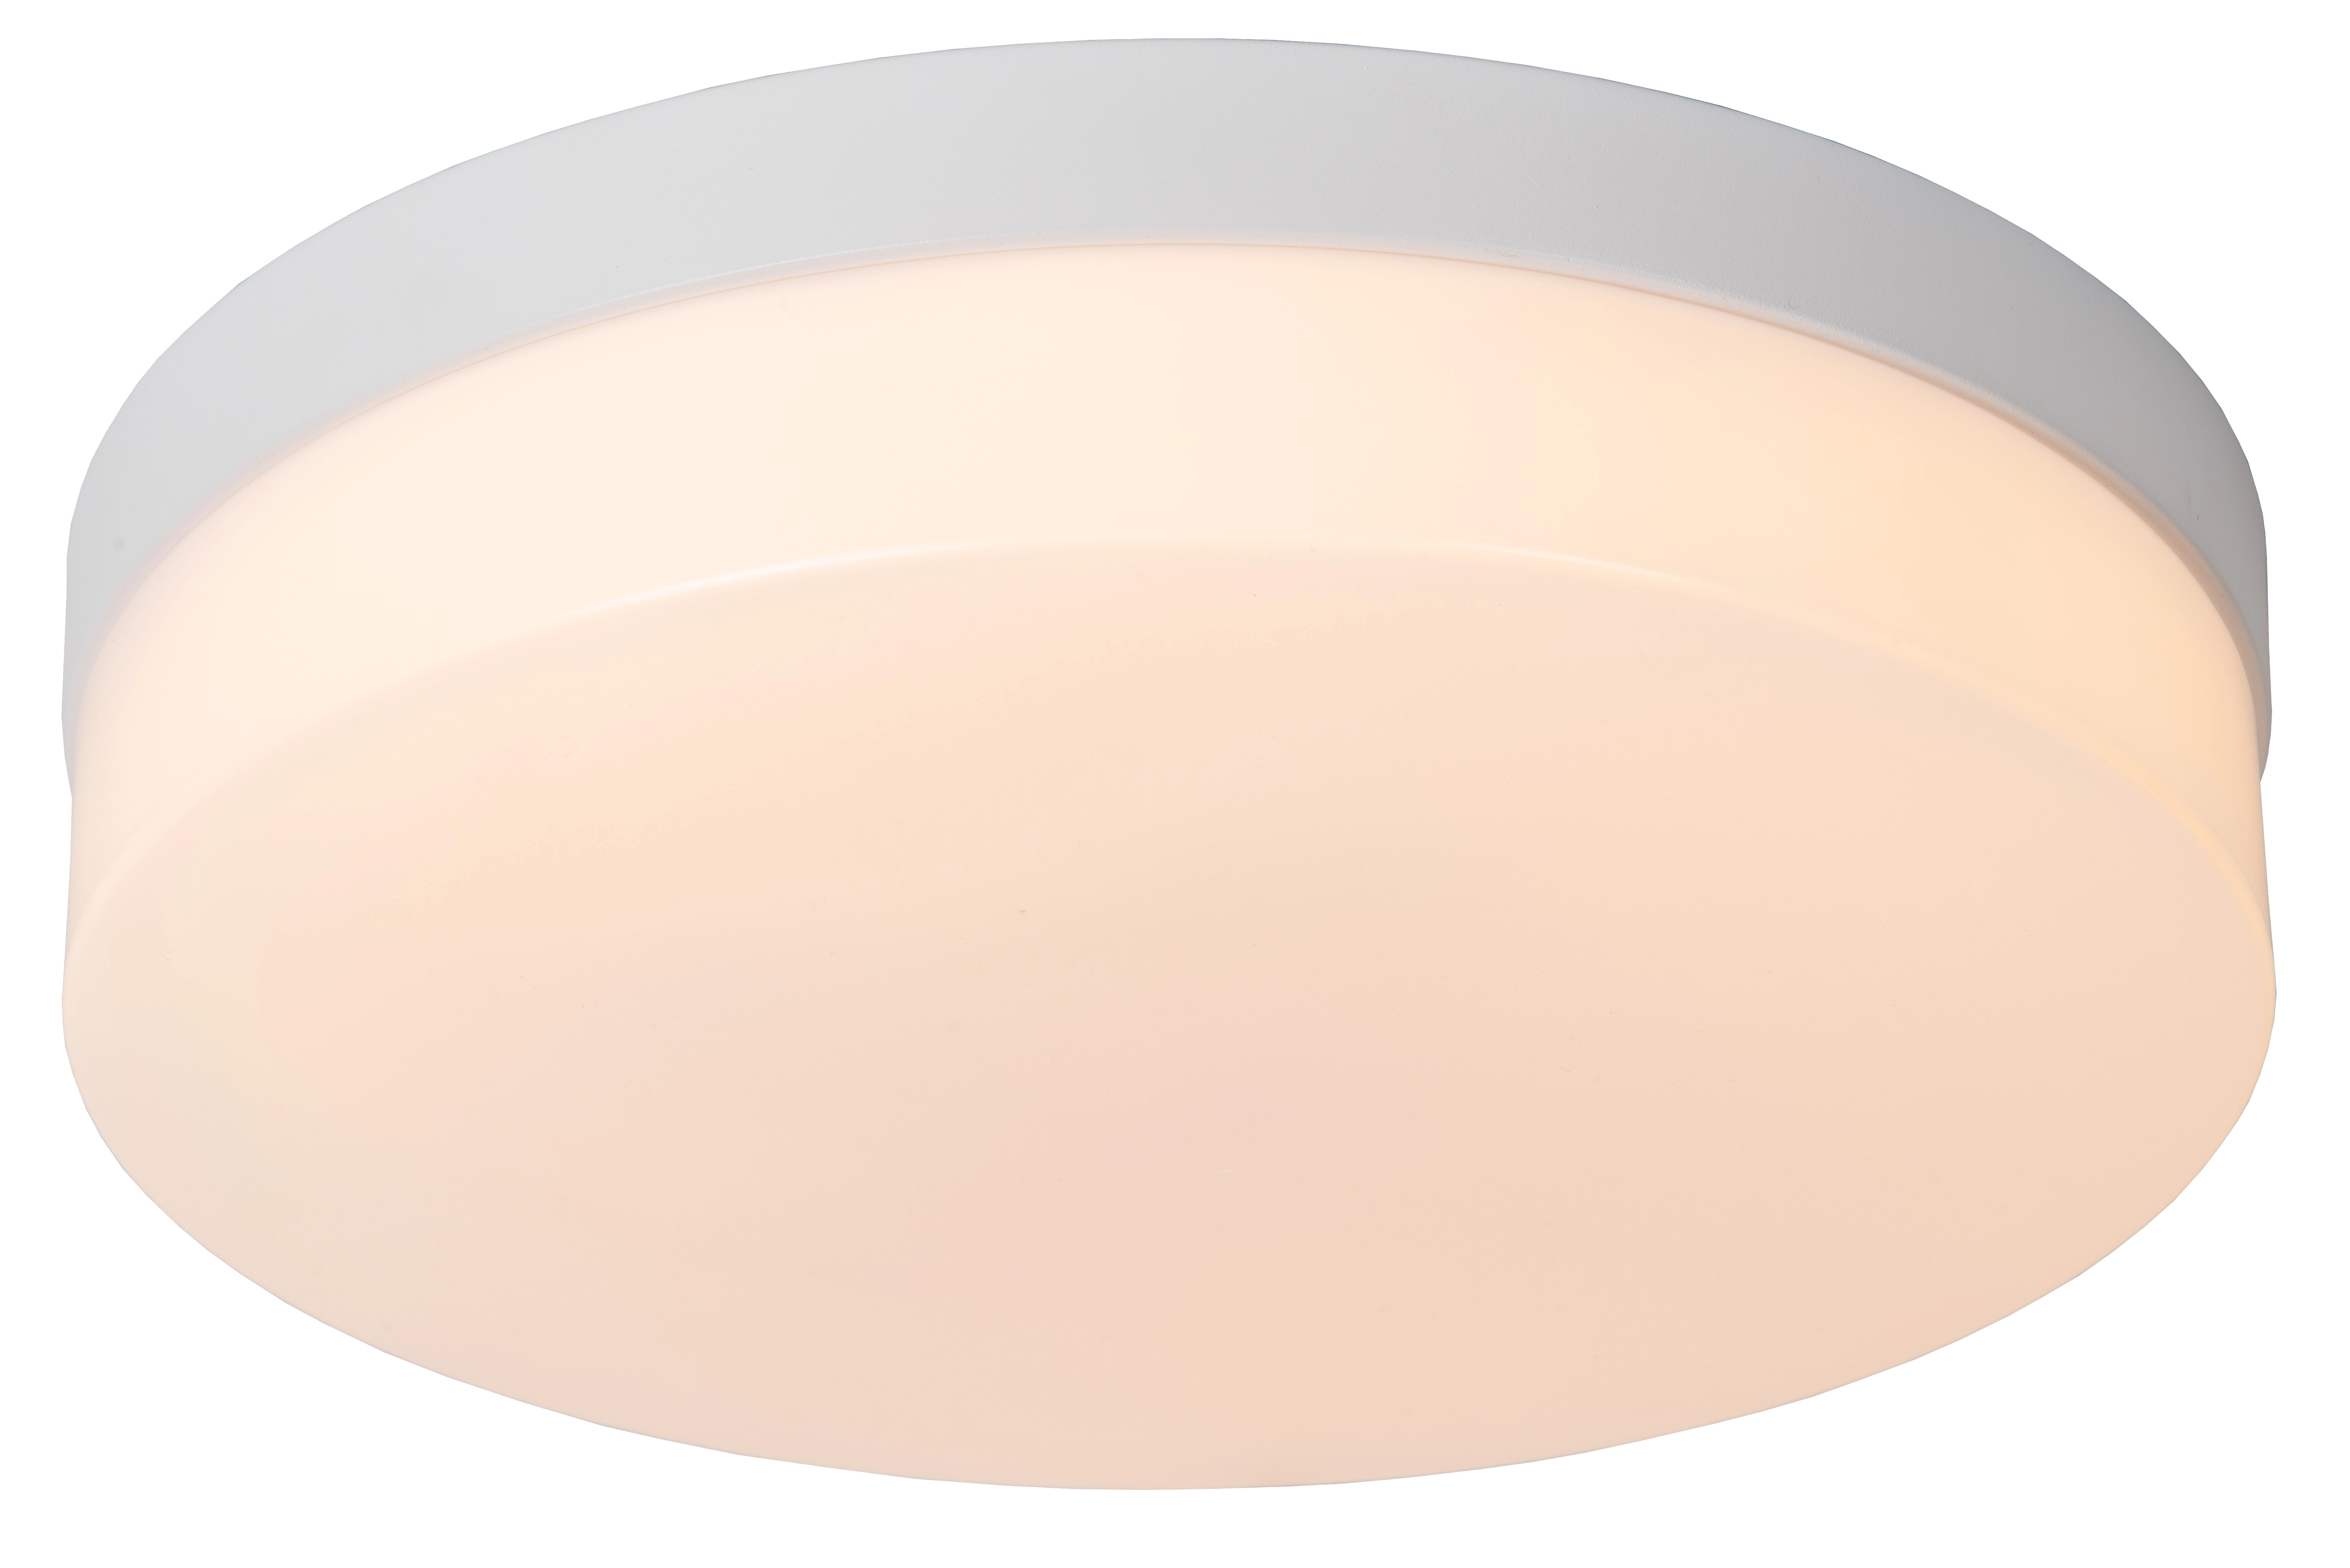 LU 79111/30/31 Lucide BISKIT - Flush ceiling light Bathroom - Ø 28 cm - LED - 1x18W 2700K - IP44 - W